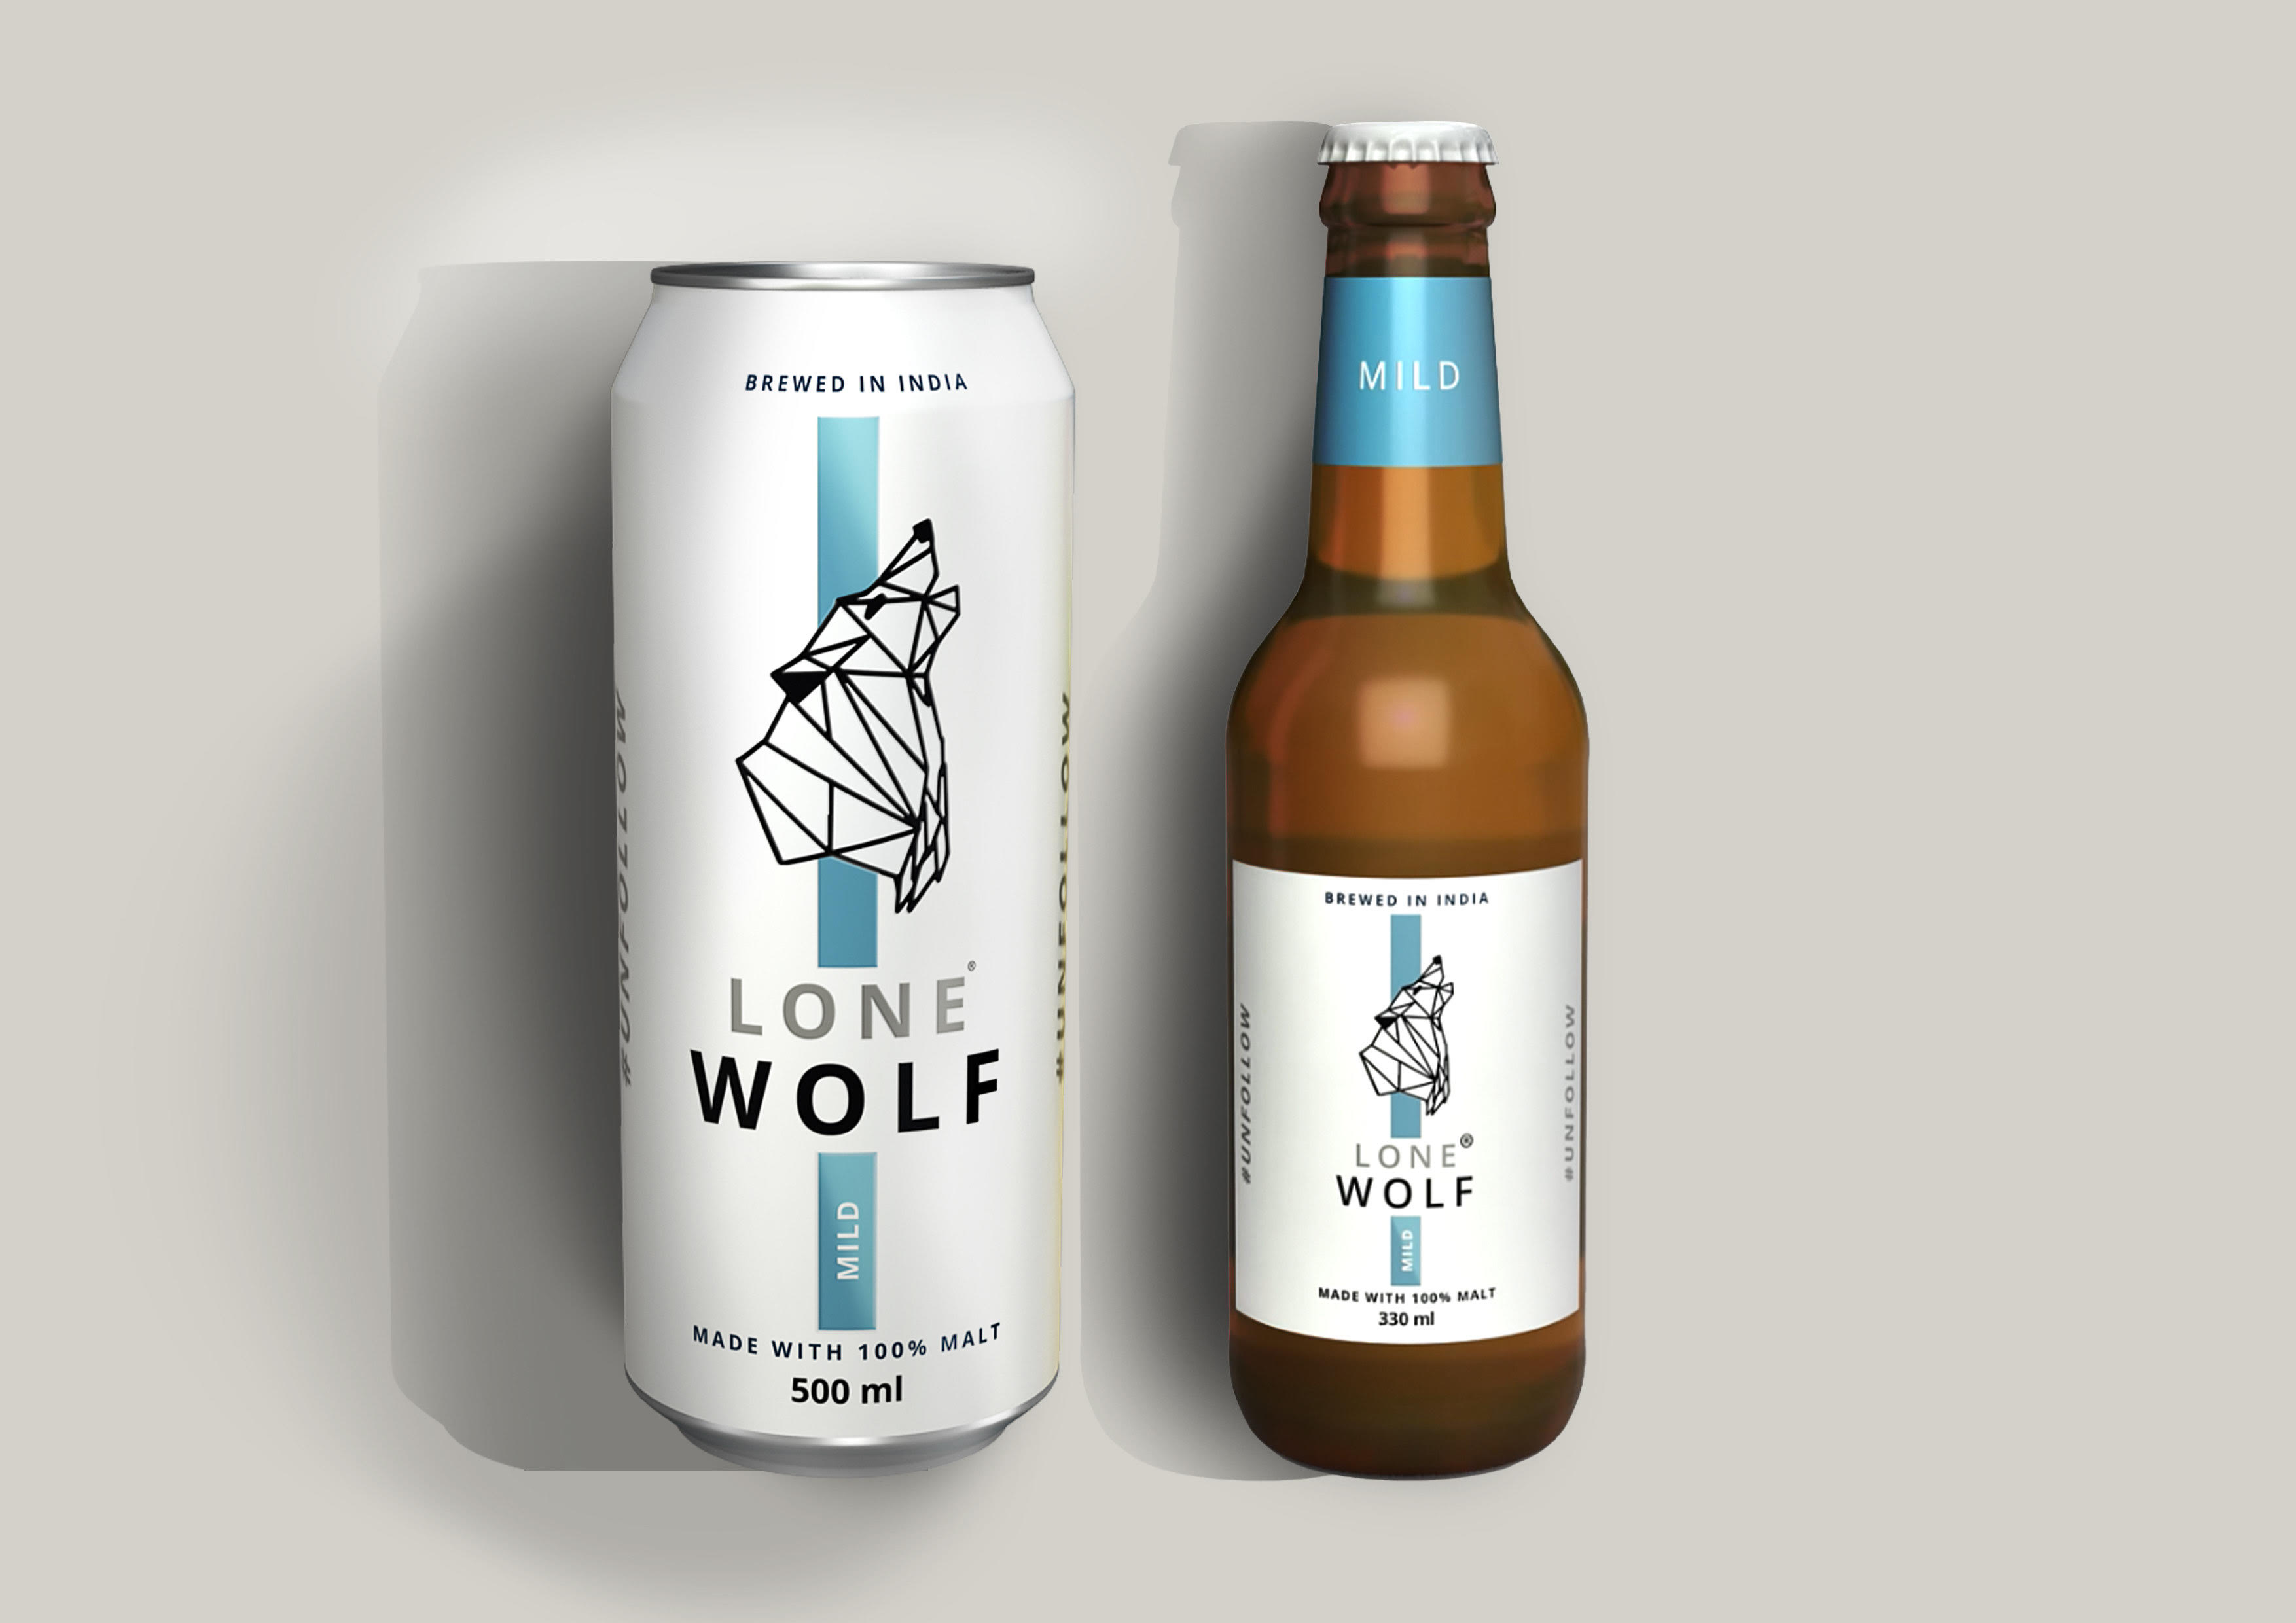 Lone Wolf, beer brand enters Delhi NCR market